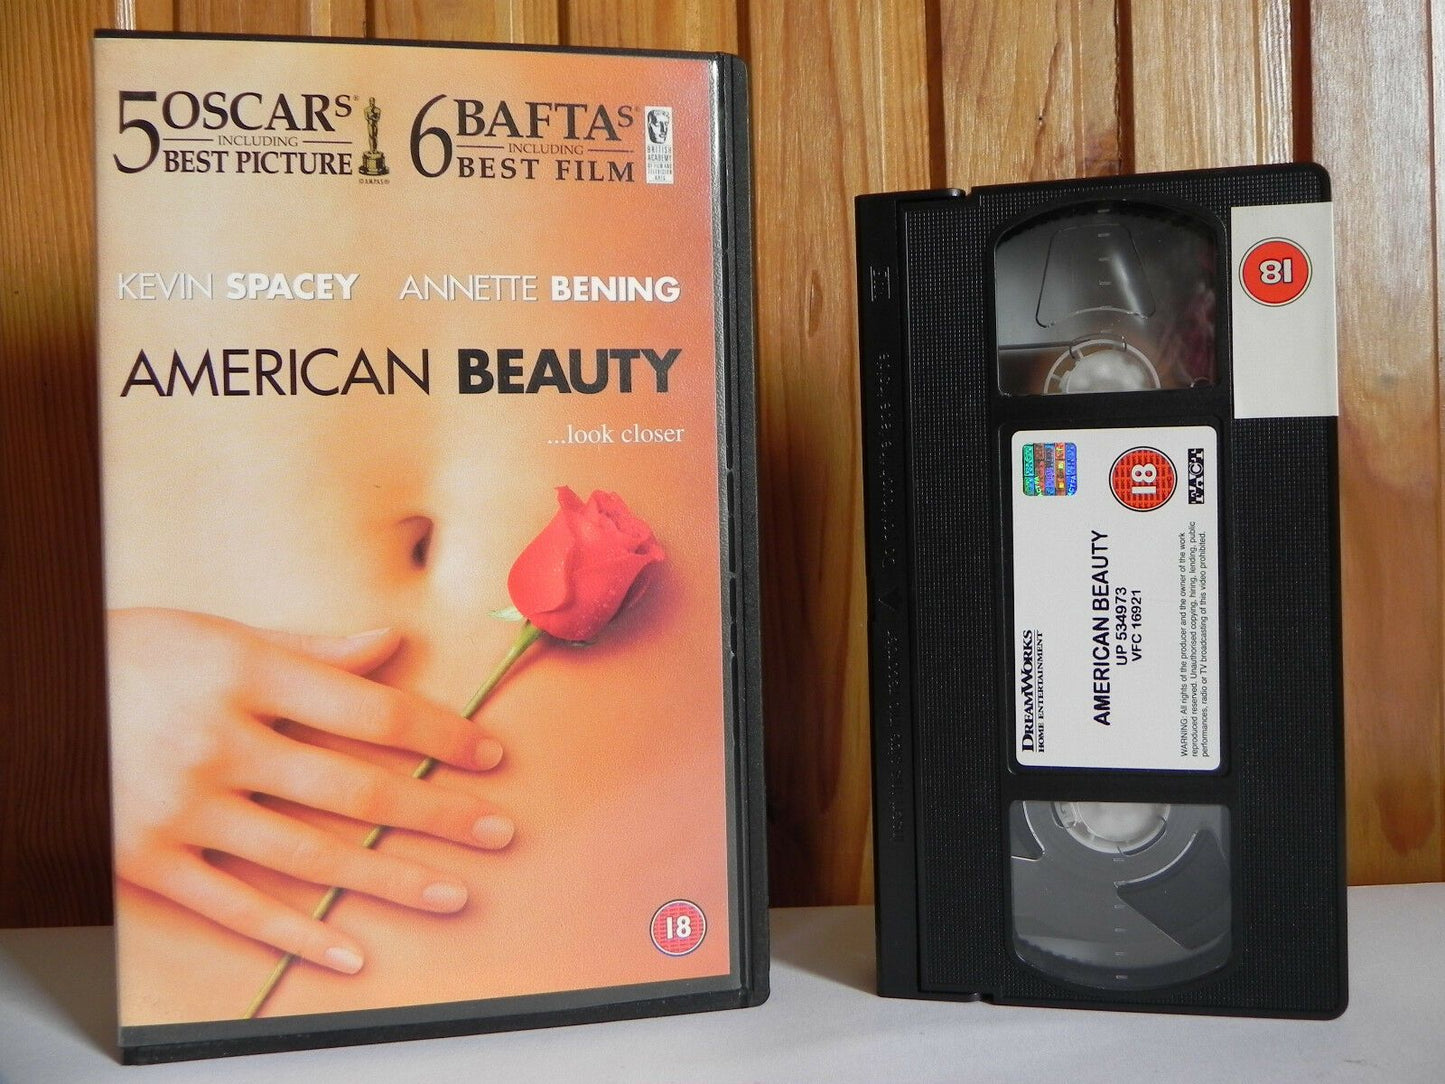 American Beauty - Large Box - Kevin Spacey Drama - 5 Oscars & 6 Baftas - Pal VHS-